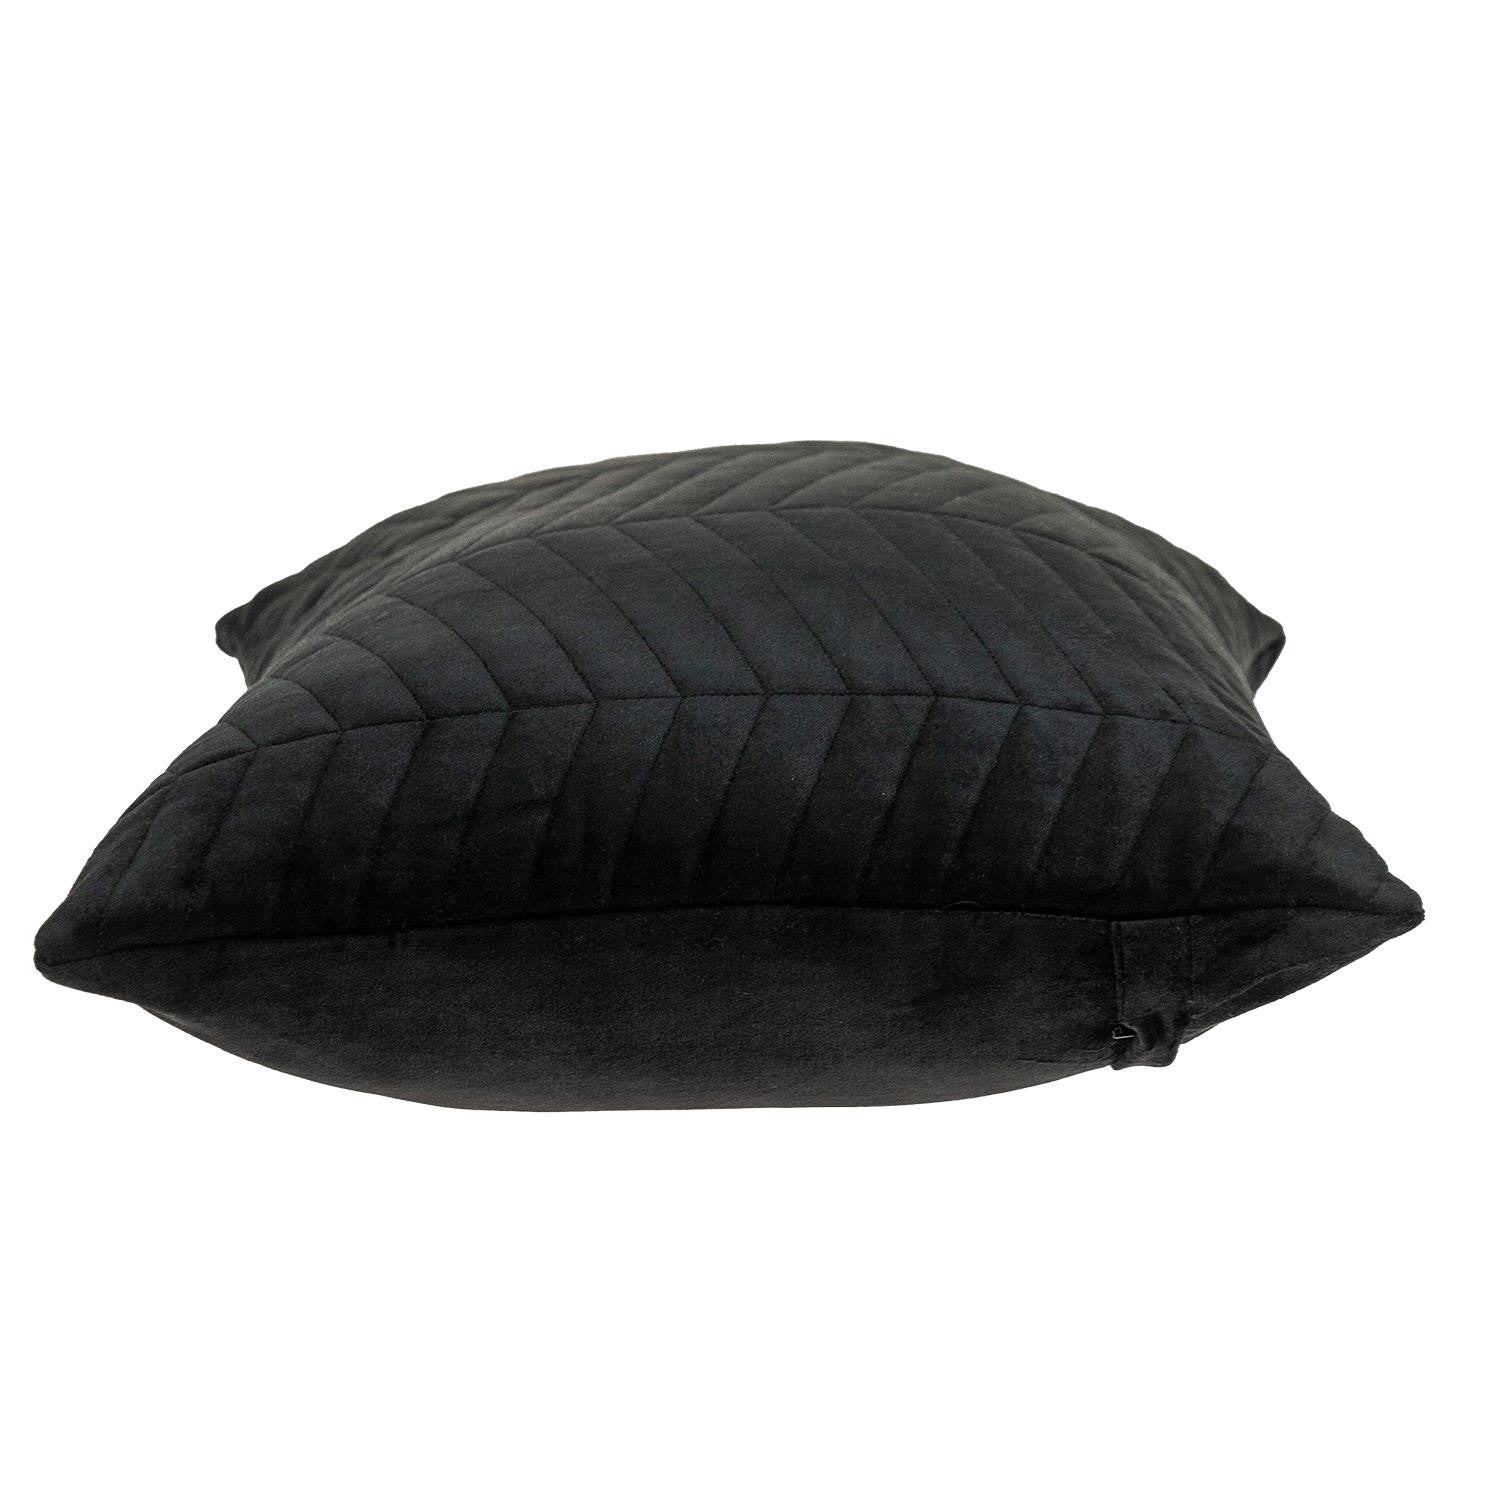 Black Quilted Velvet Zig Zag Decorative Lumbar Pillow